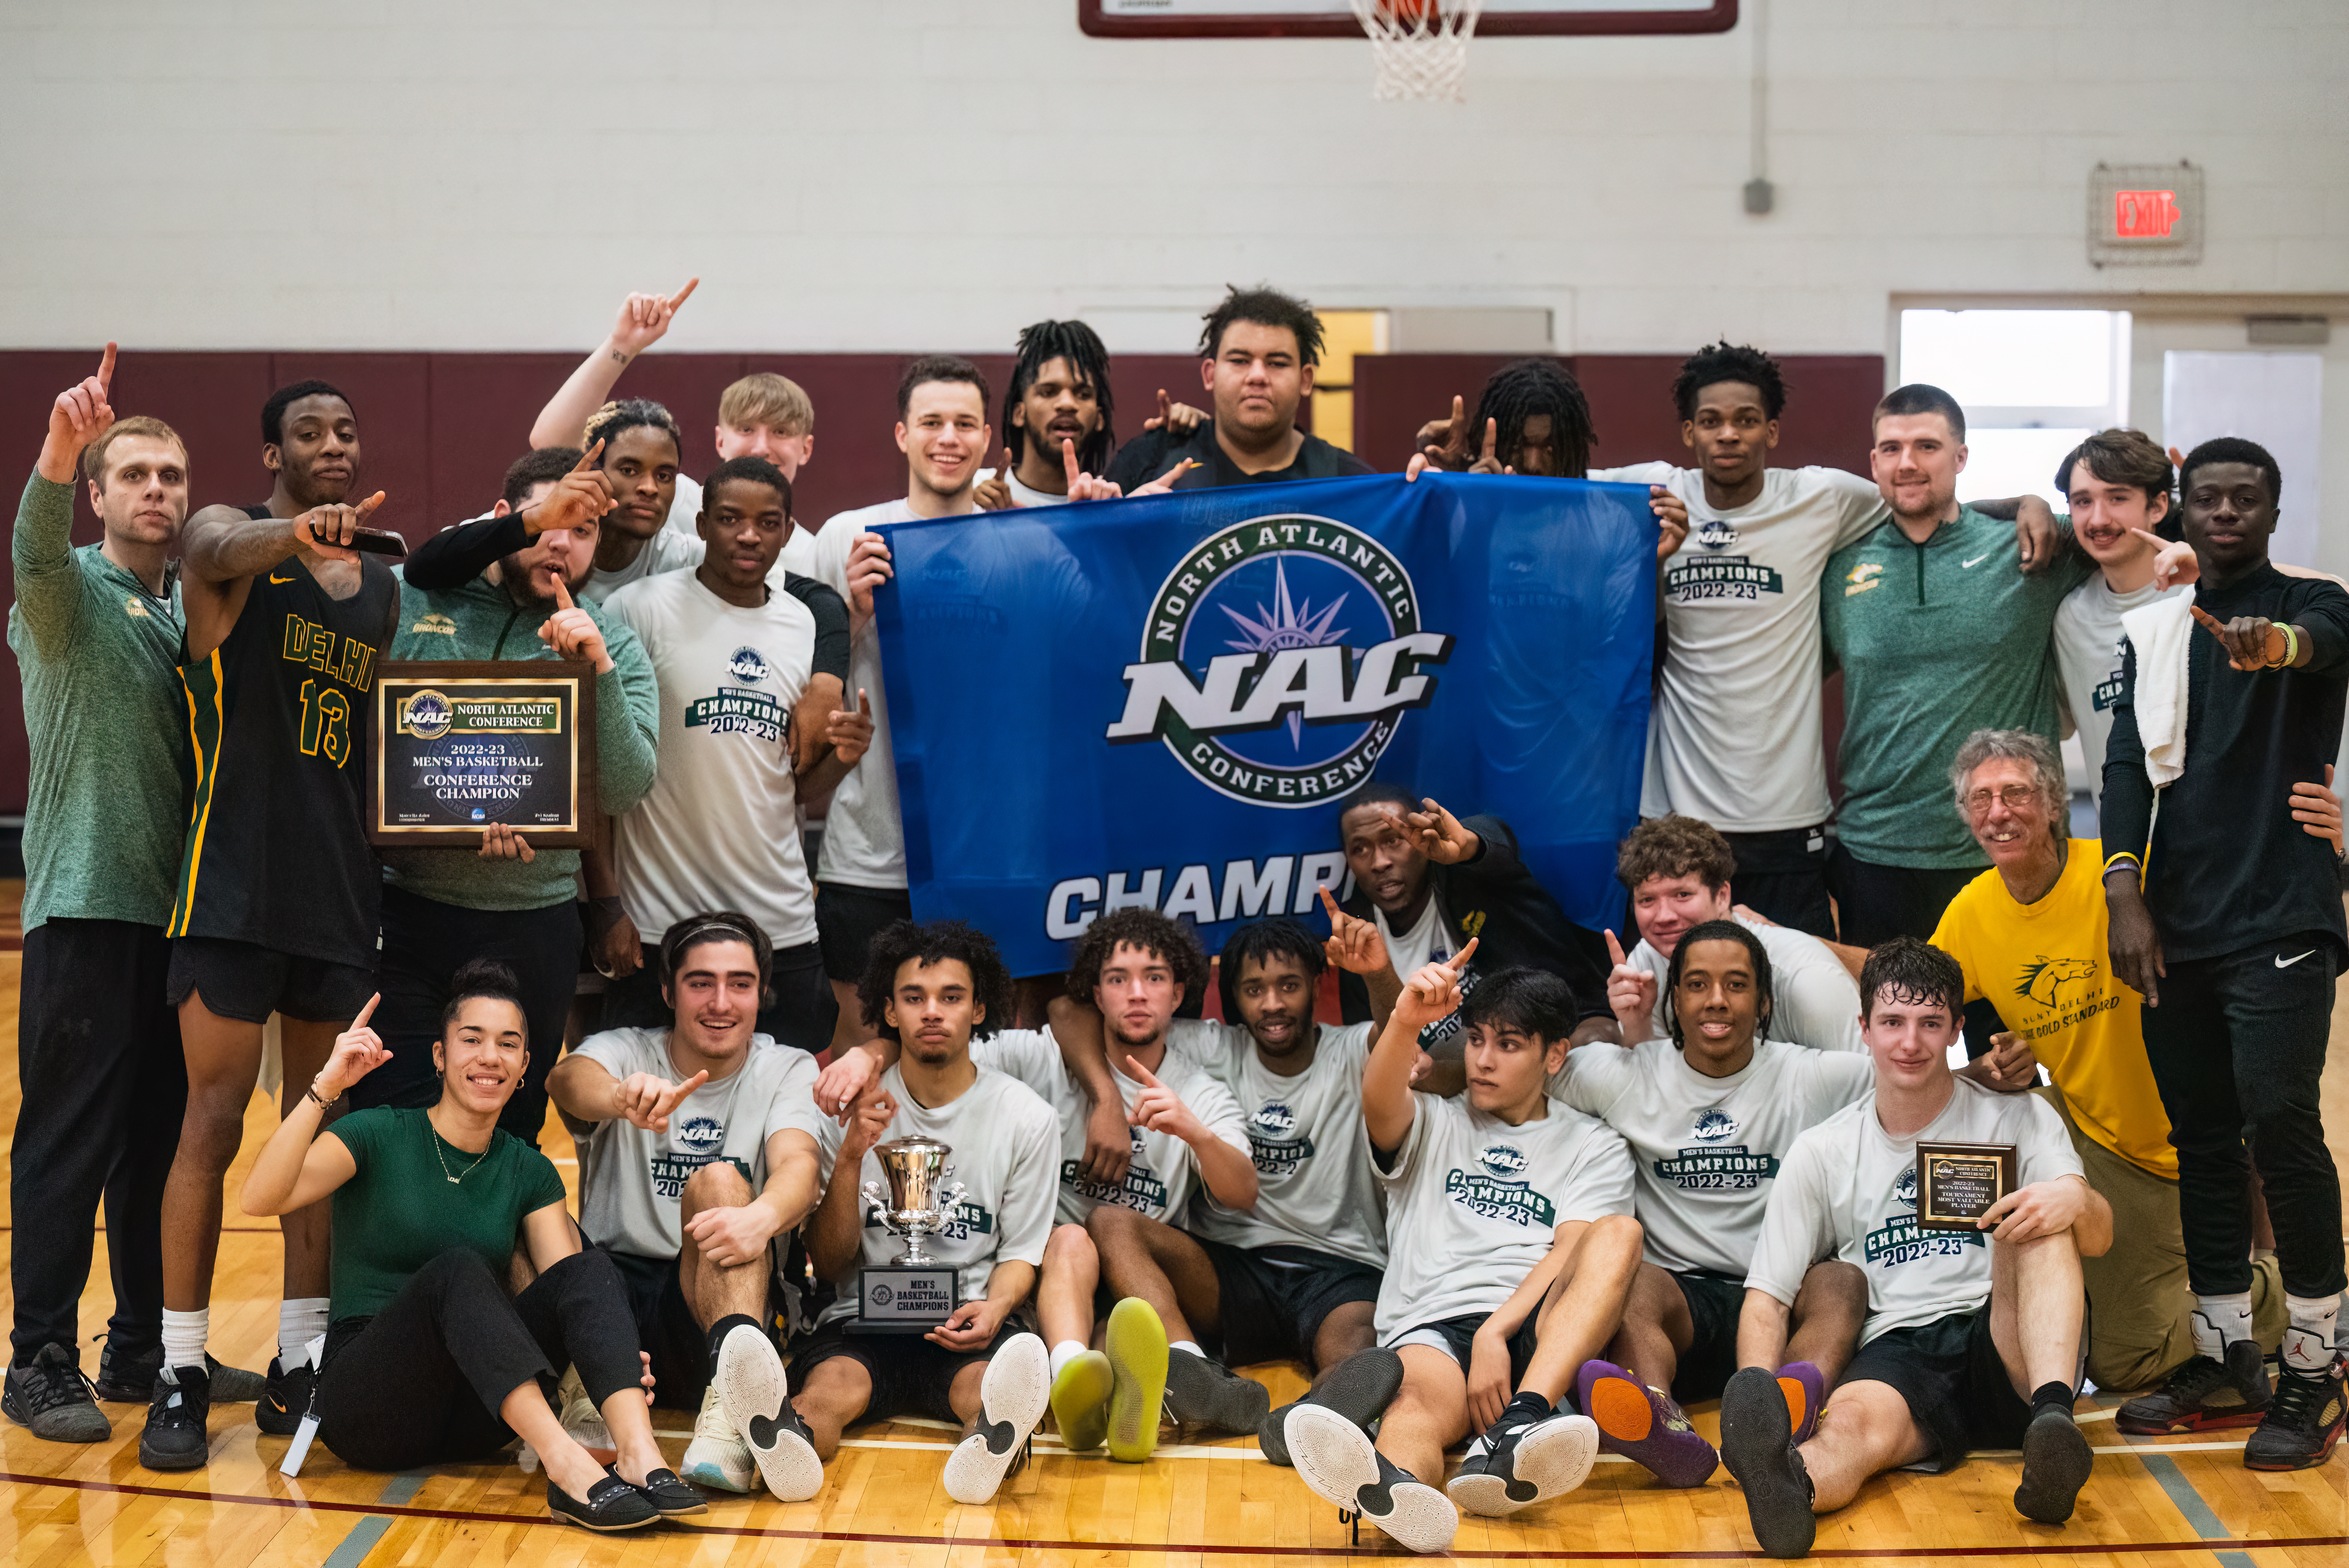 Men’s Basketball continue their historic season winning first ever NAC Championship